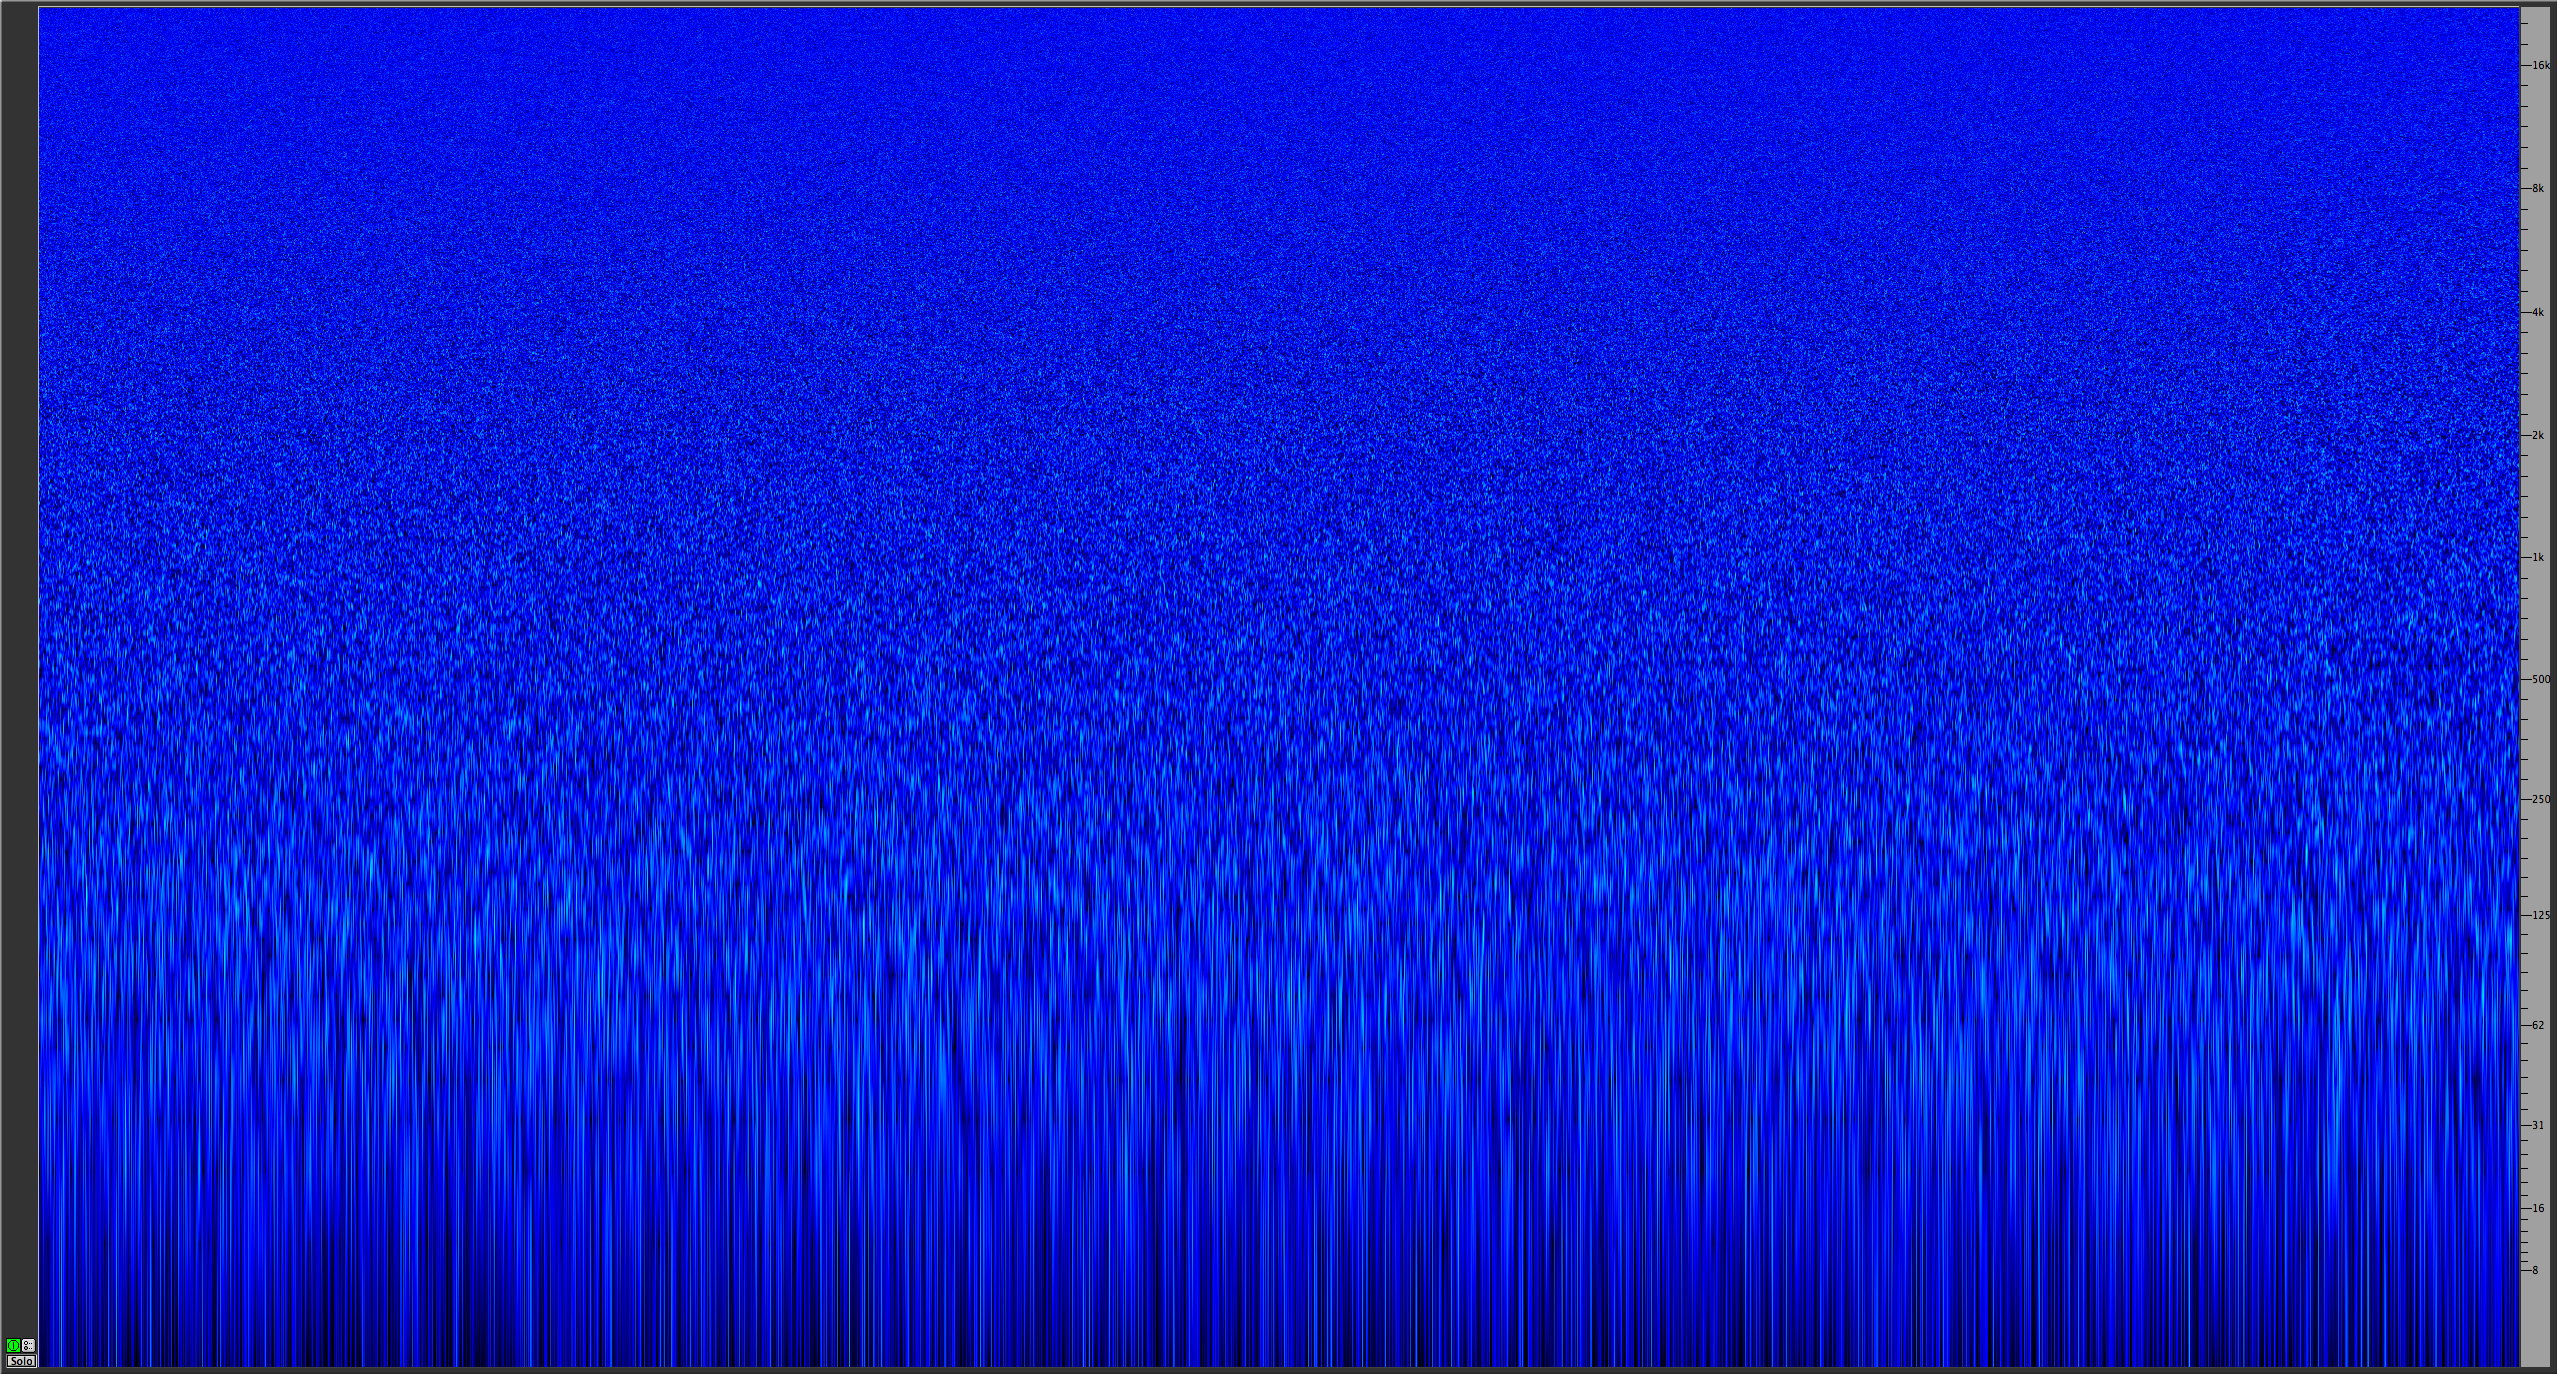 pink noise spectragram